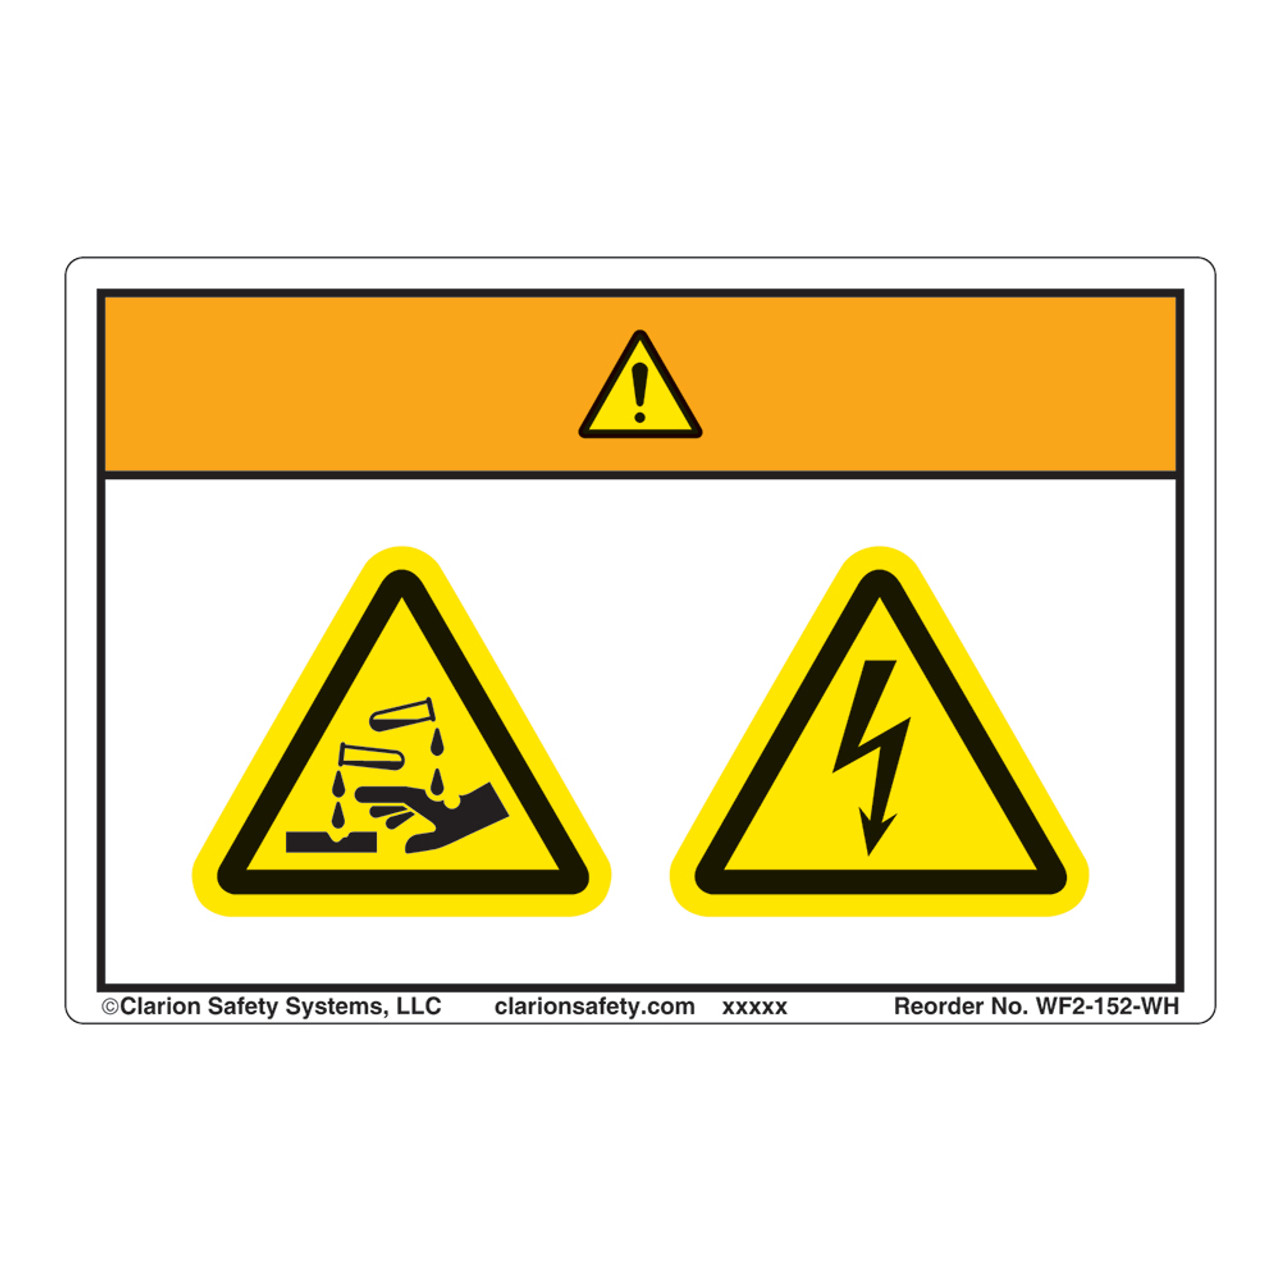 chemical hazard sign